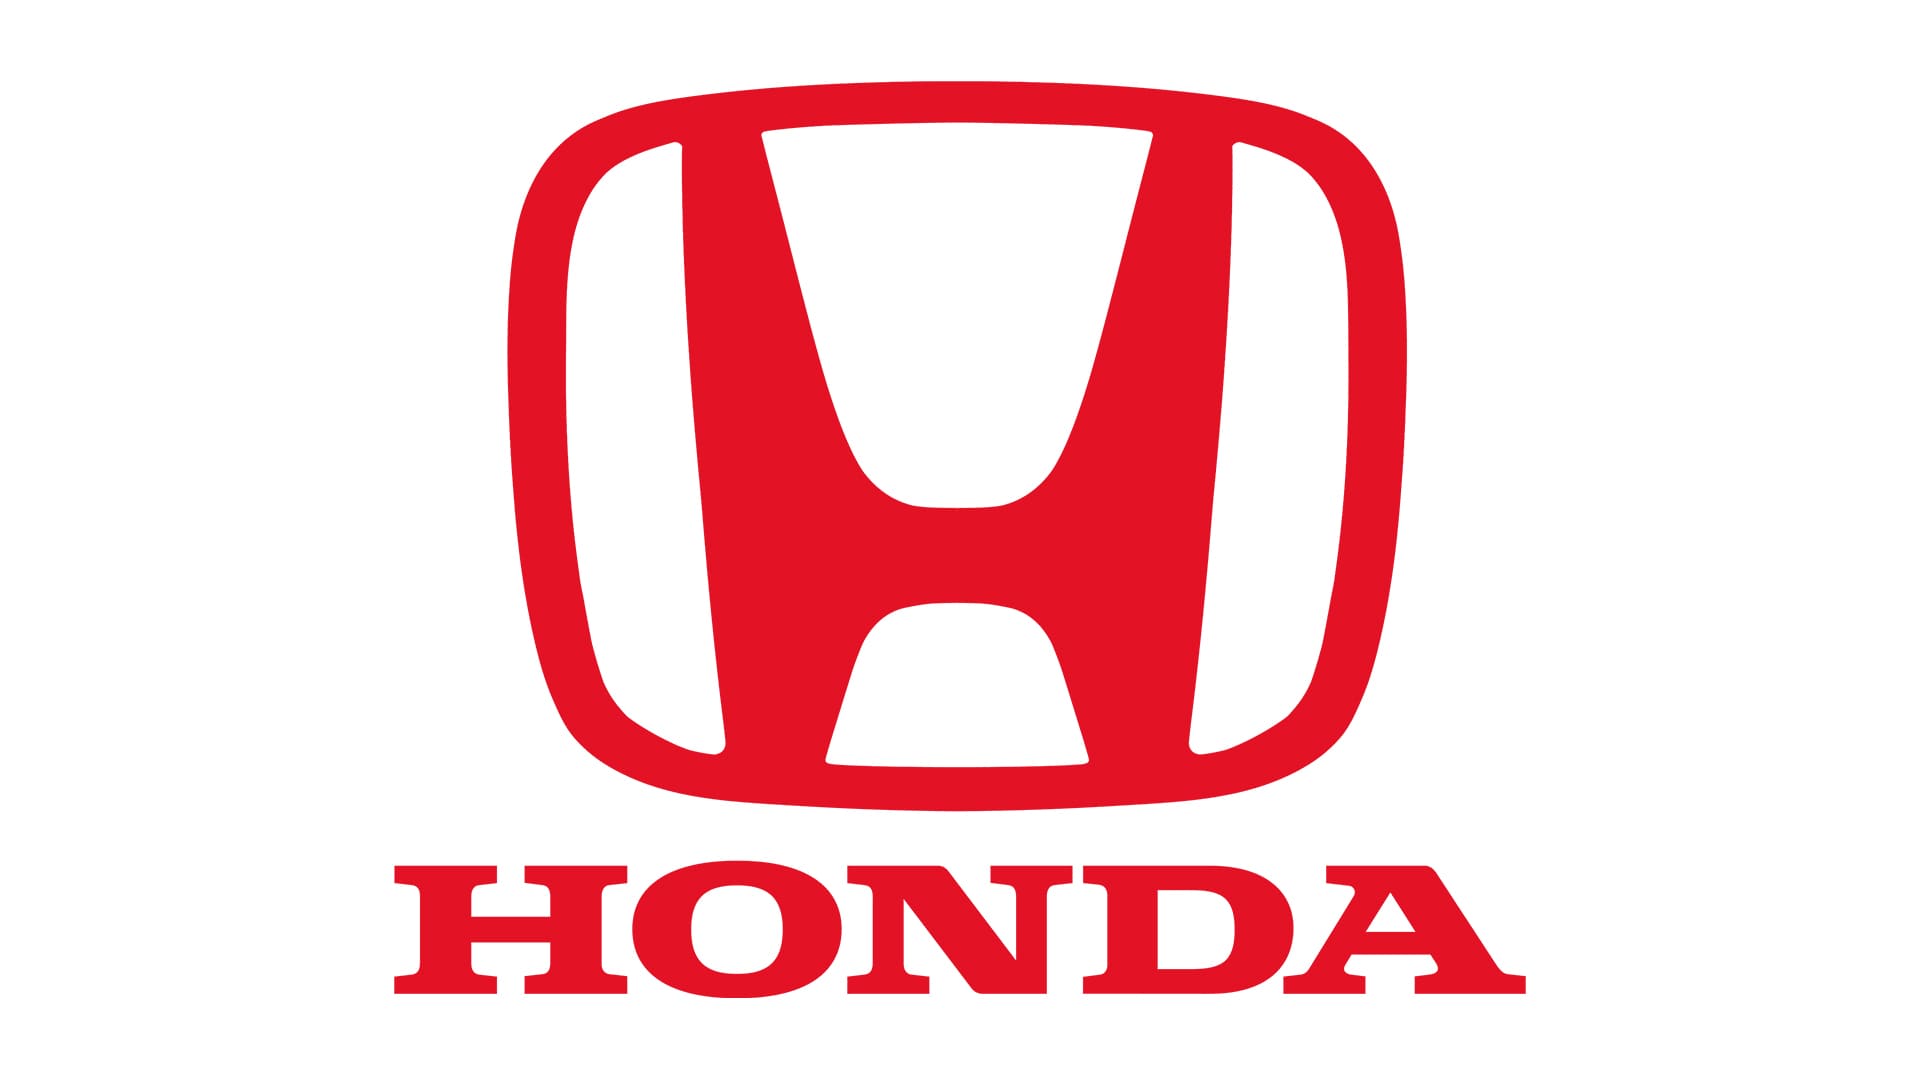 Red honda logo